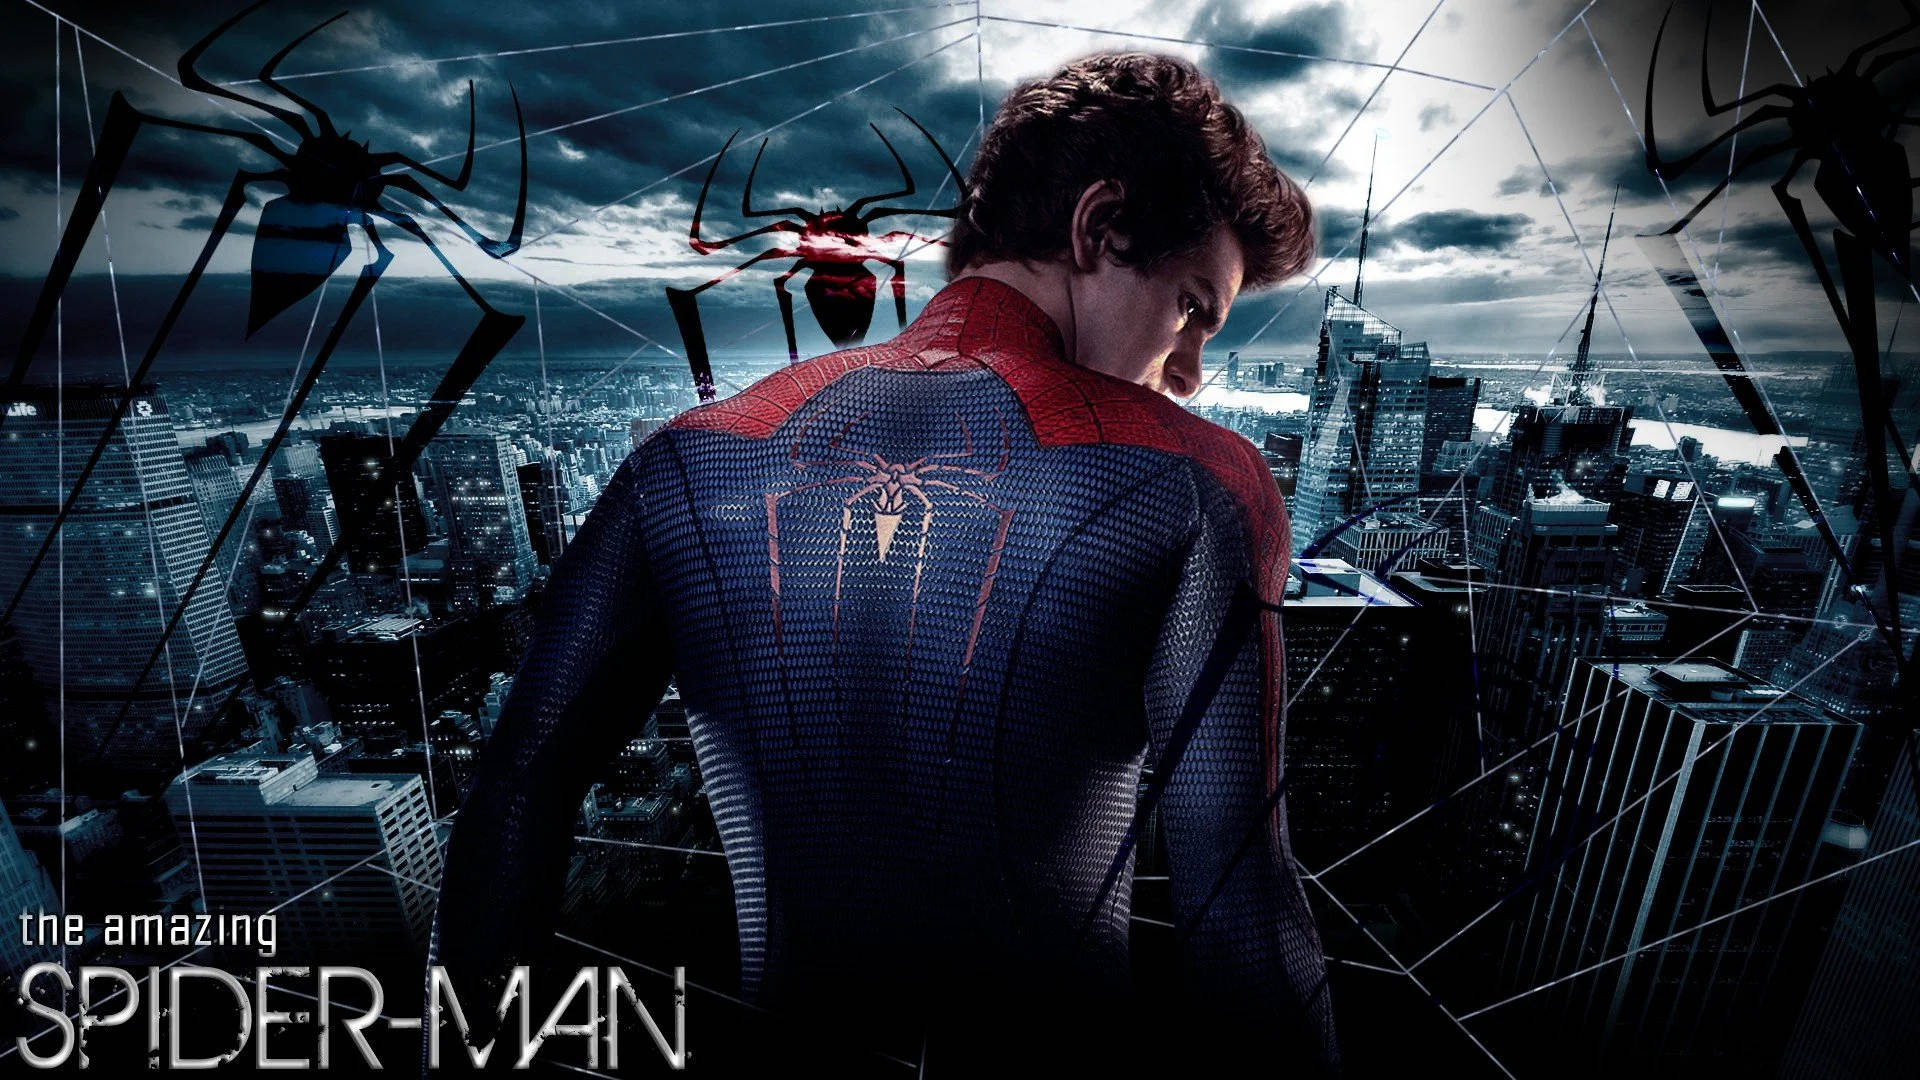 Spider-man Andrew Garfield Back Pose Wallpaper